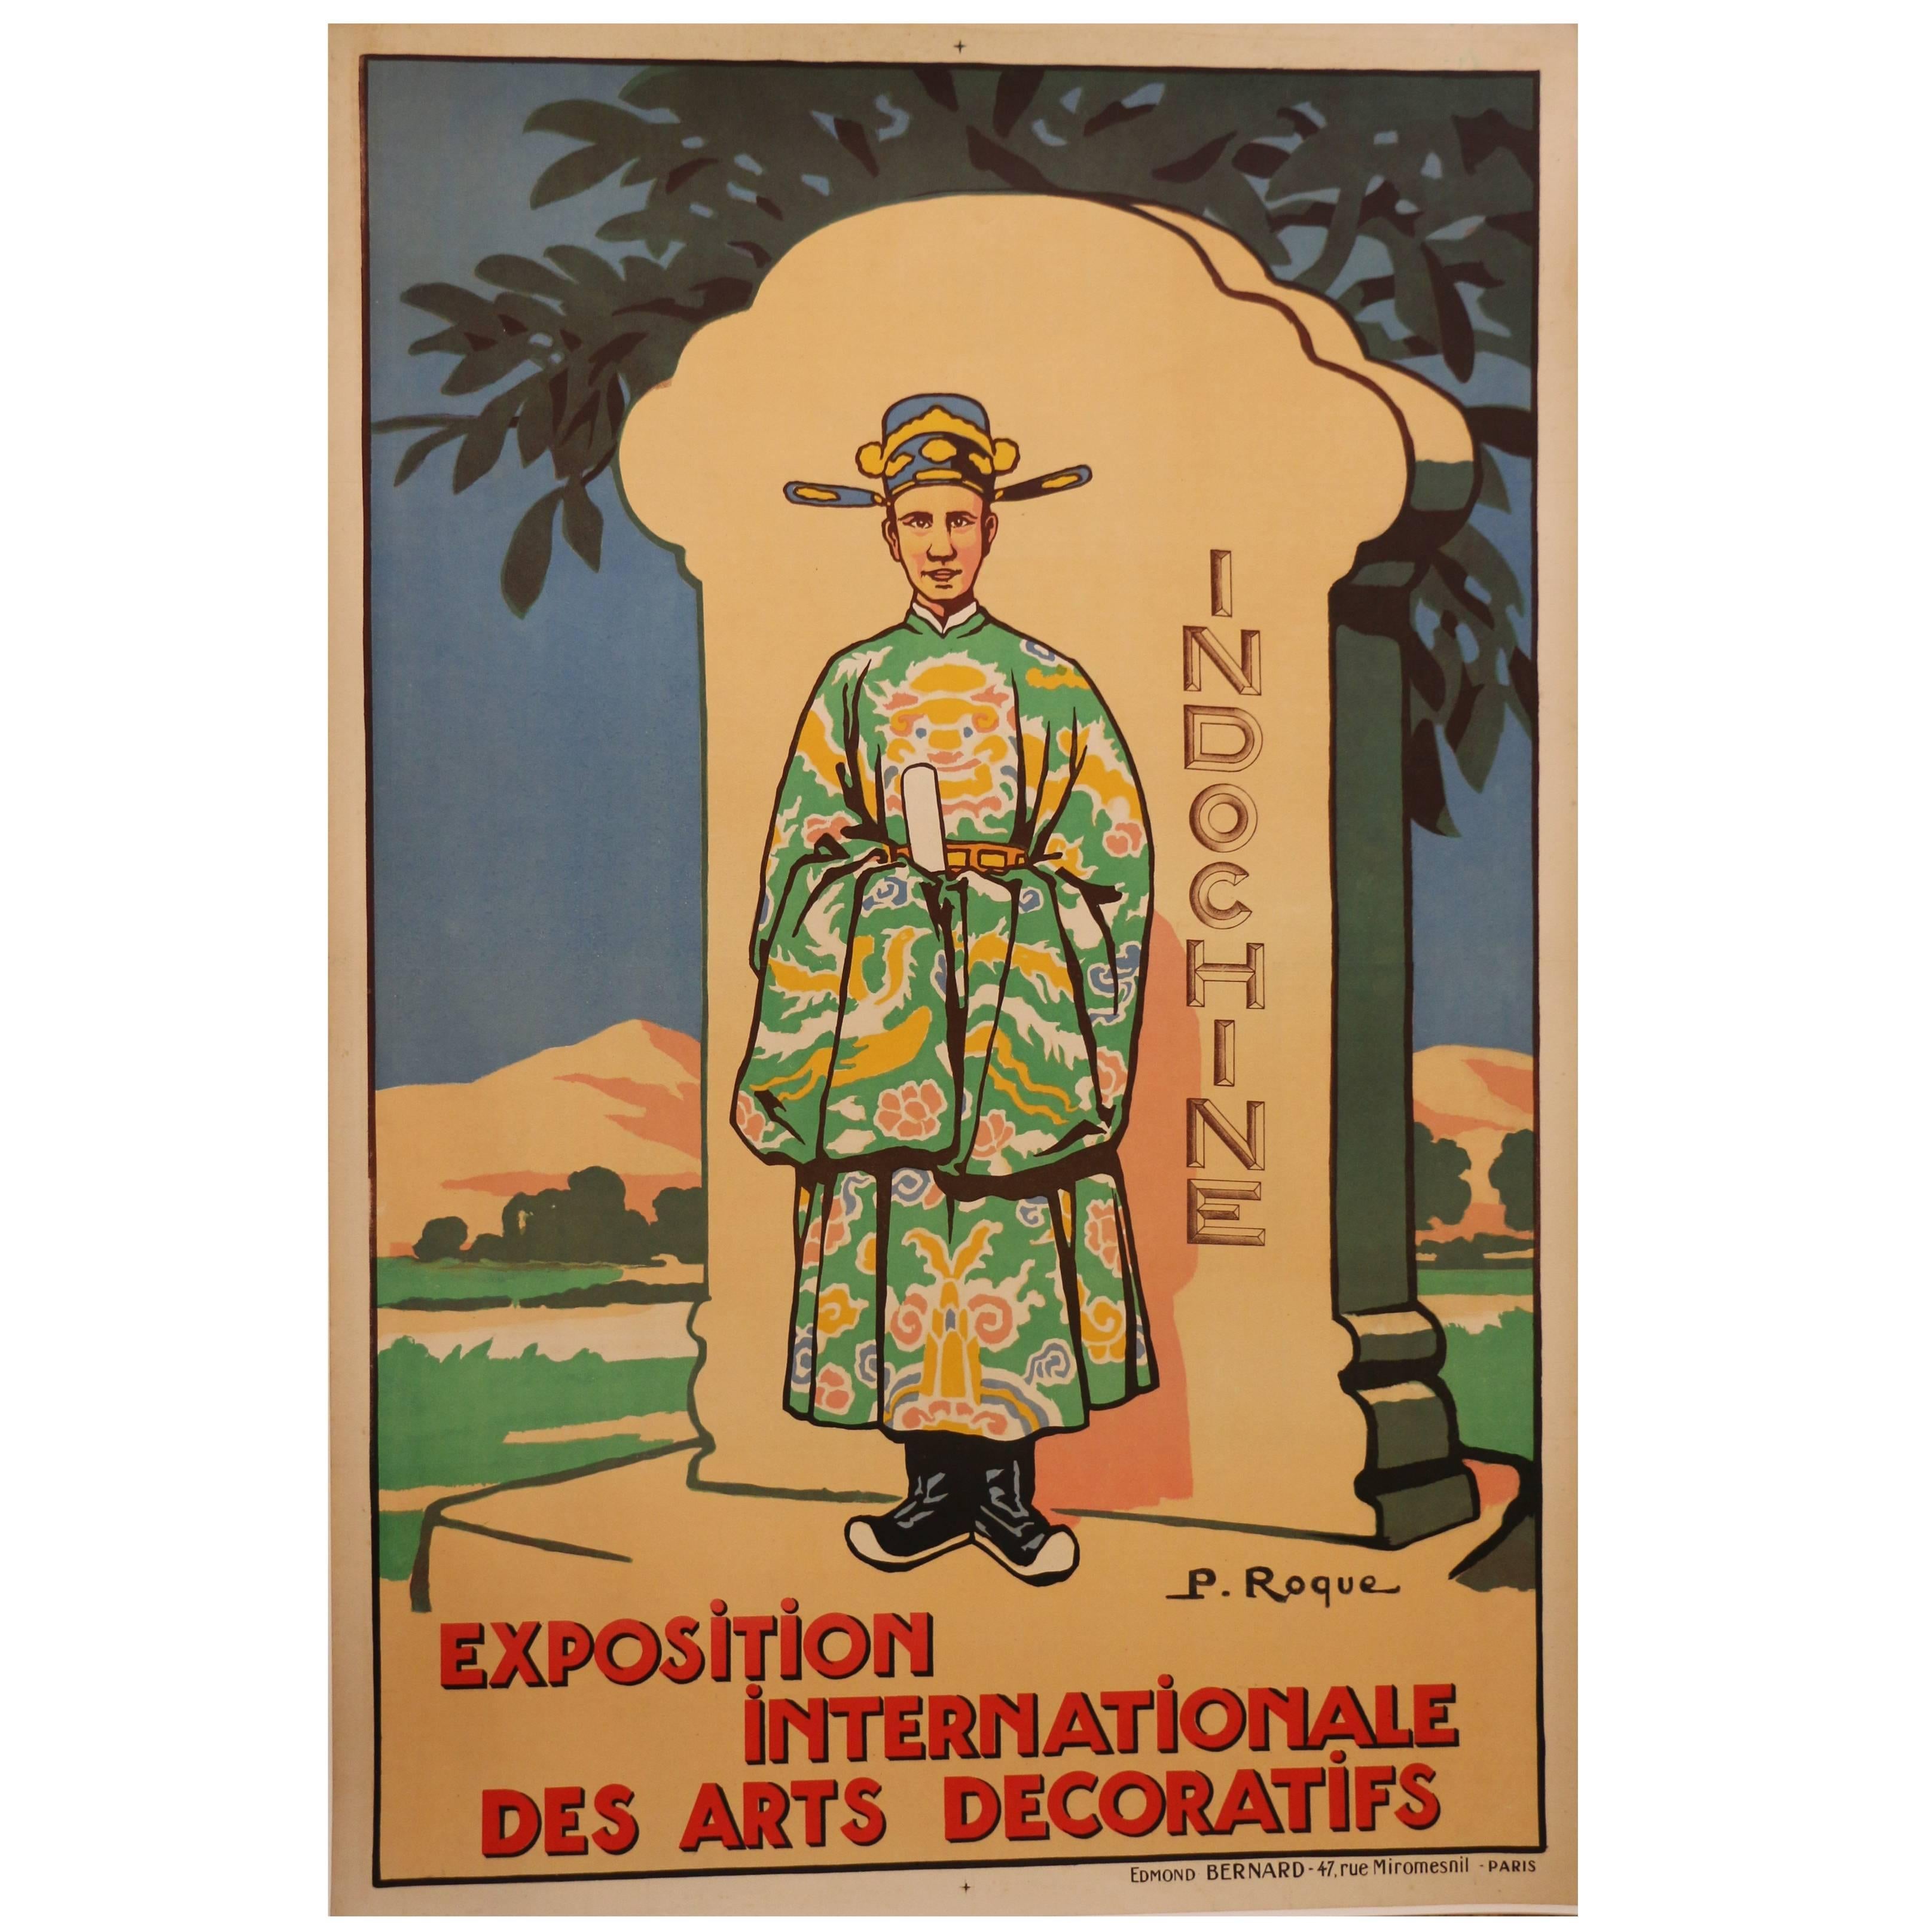 Poster for the "Exposition Internationale Des Arts Décoratifs", France, 1925